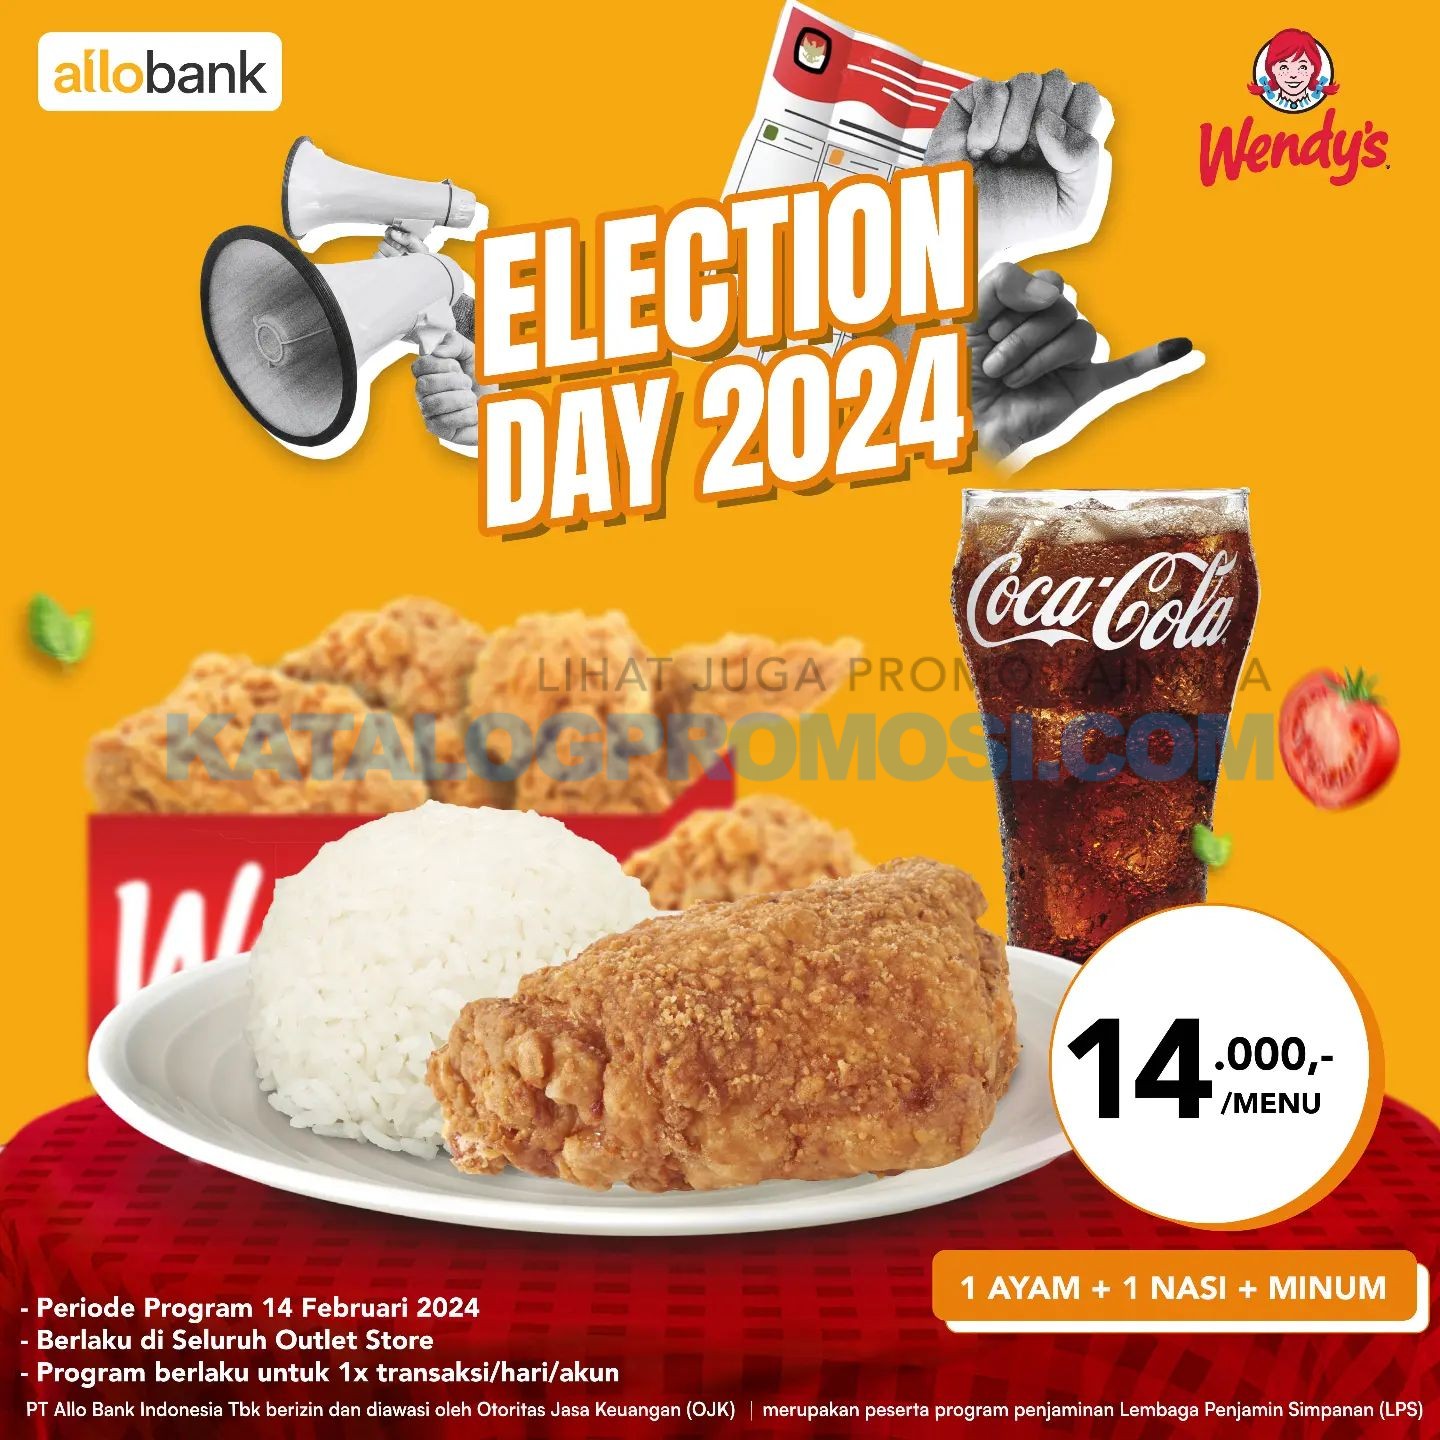 Promo WENDY'S ALLOBANK Special Election Day - Paket 1 Fried Chicken + 1 Rice + 1 Coca Cola cuma Rp. 14.000 berlaku hanya 1 hari, tanggal 14 Februari 2024